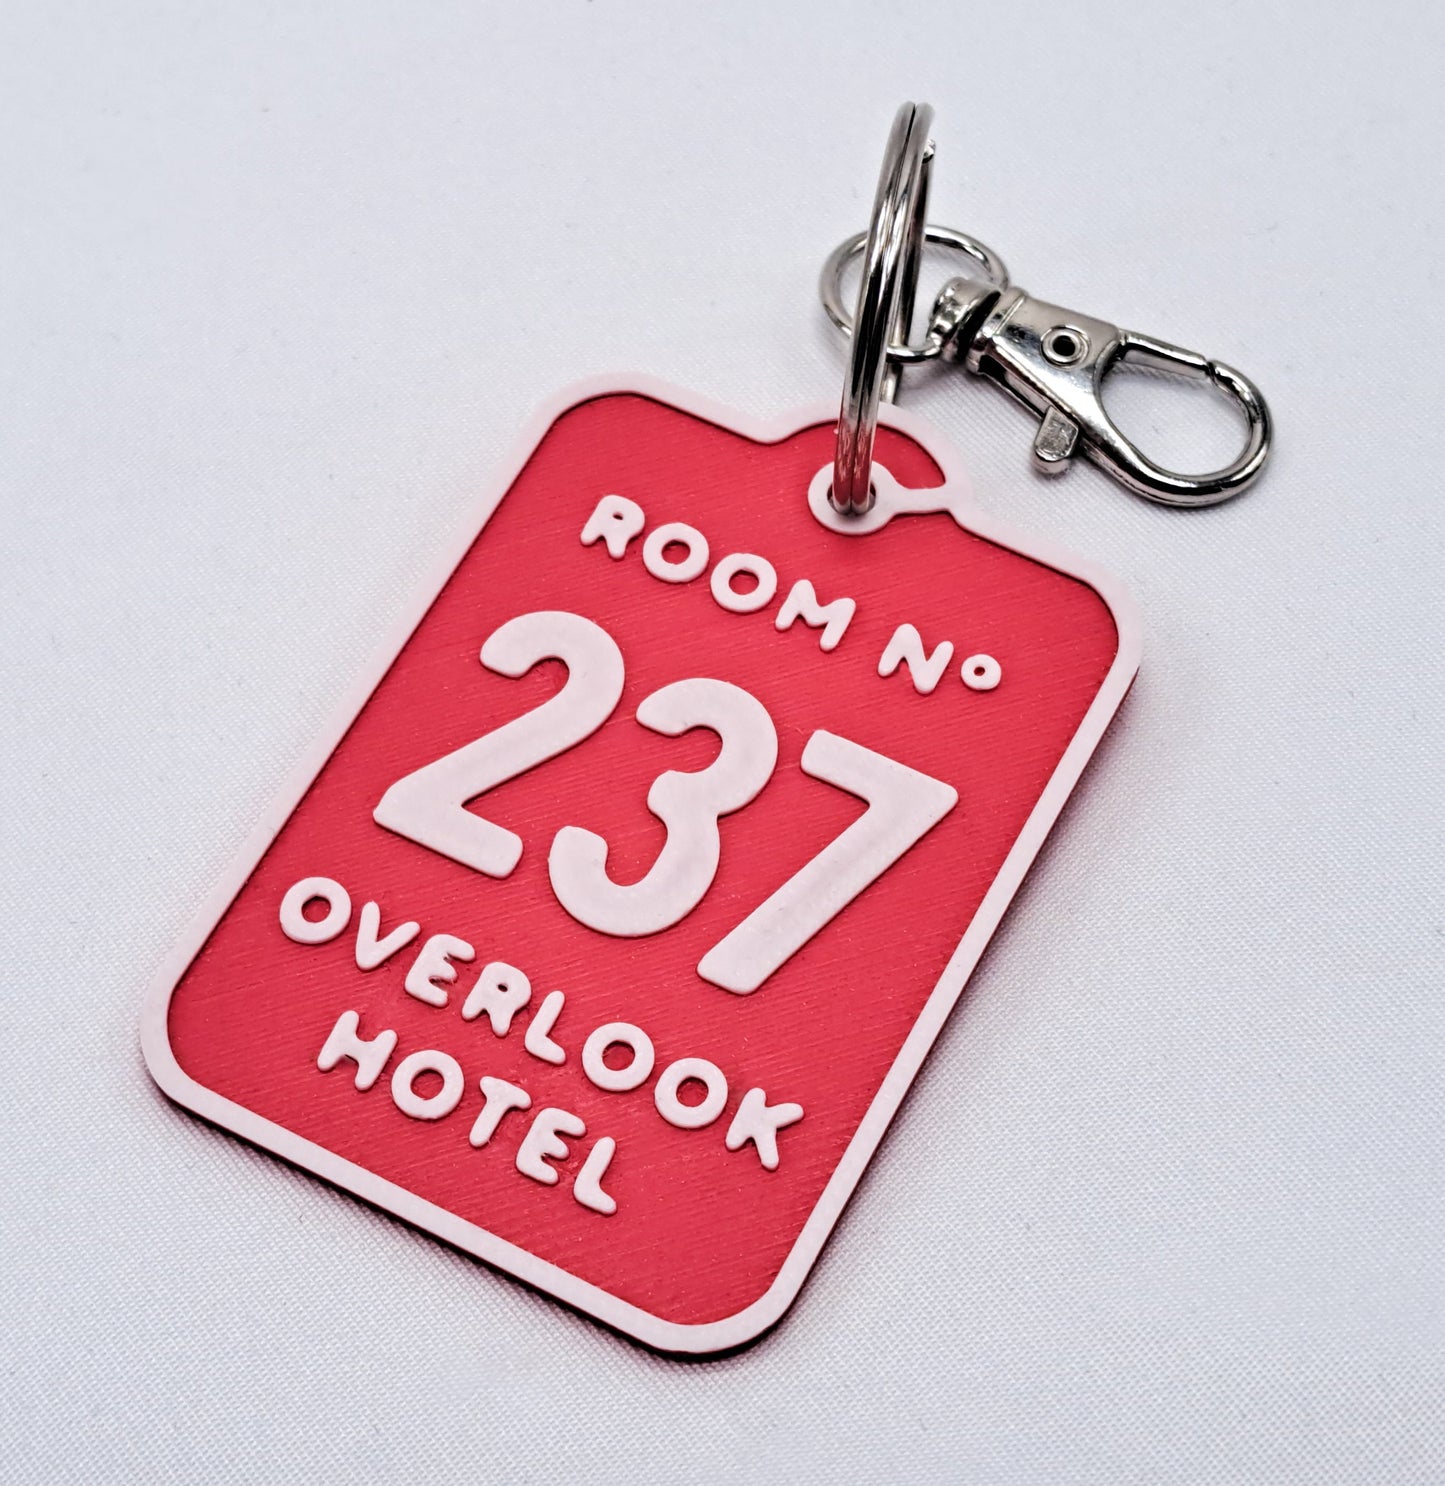 The Shining Overlook Hotel Room 237 Inspired Keychain